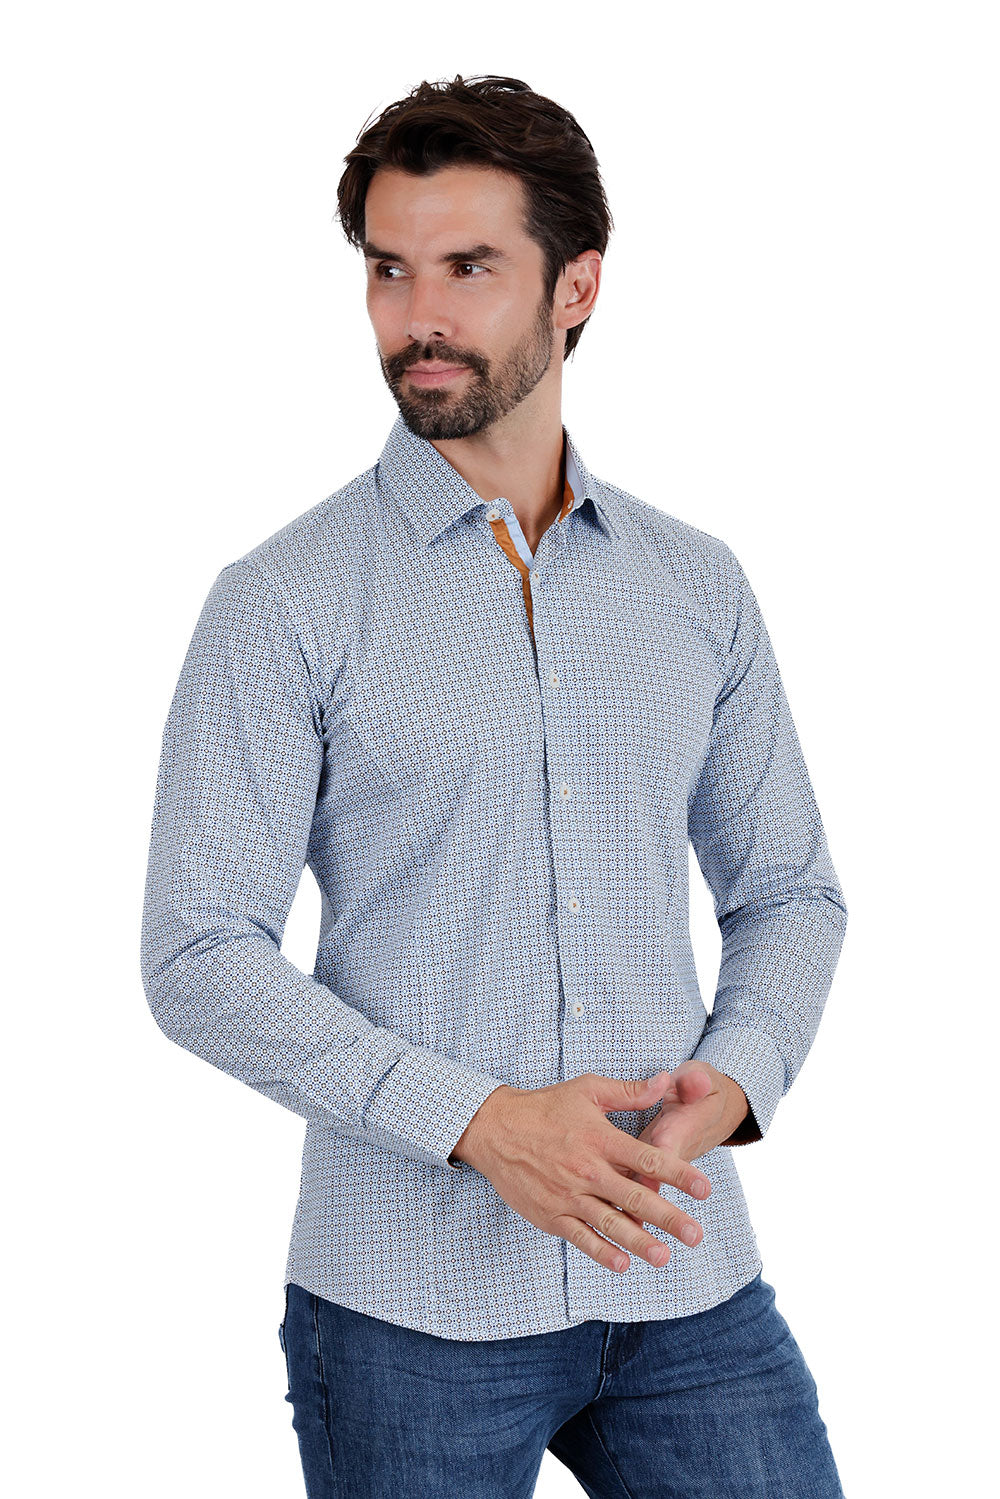 BARABAS Men's Printed Floral Semi-Stretch Long Sleeve Shirts 3B361 Blue